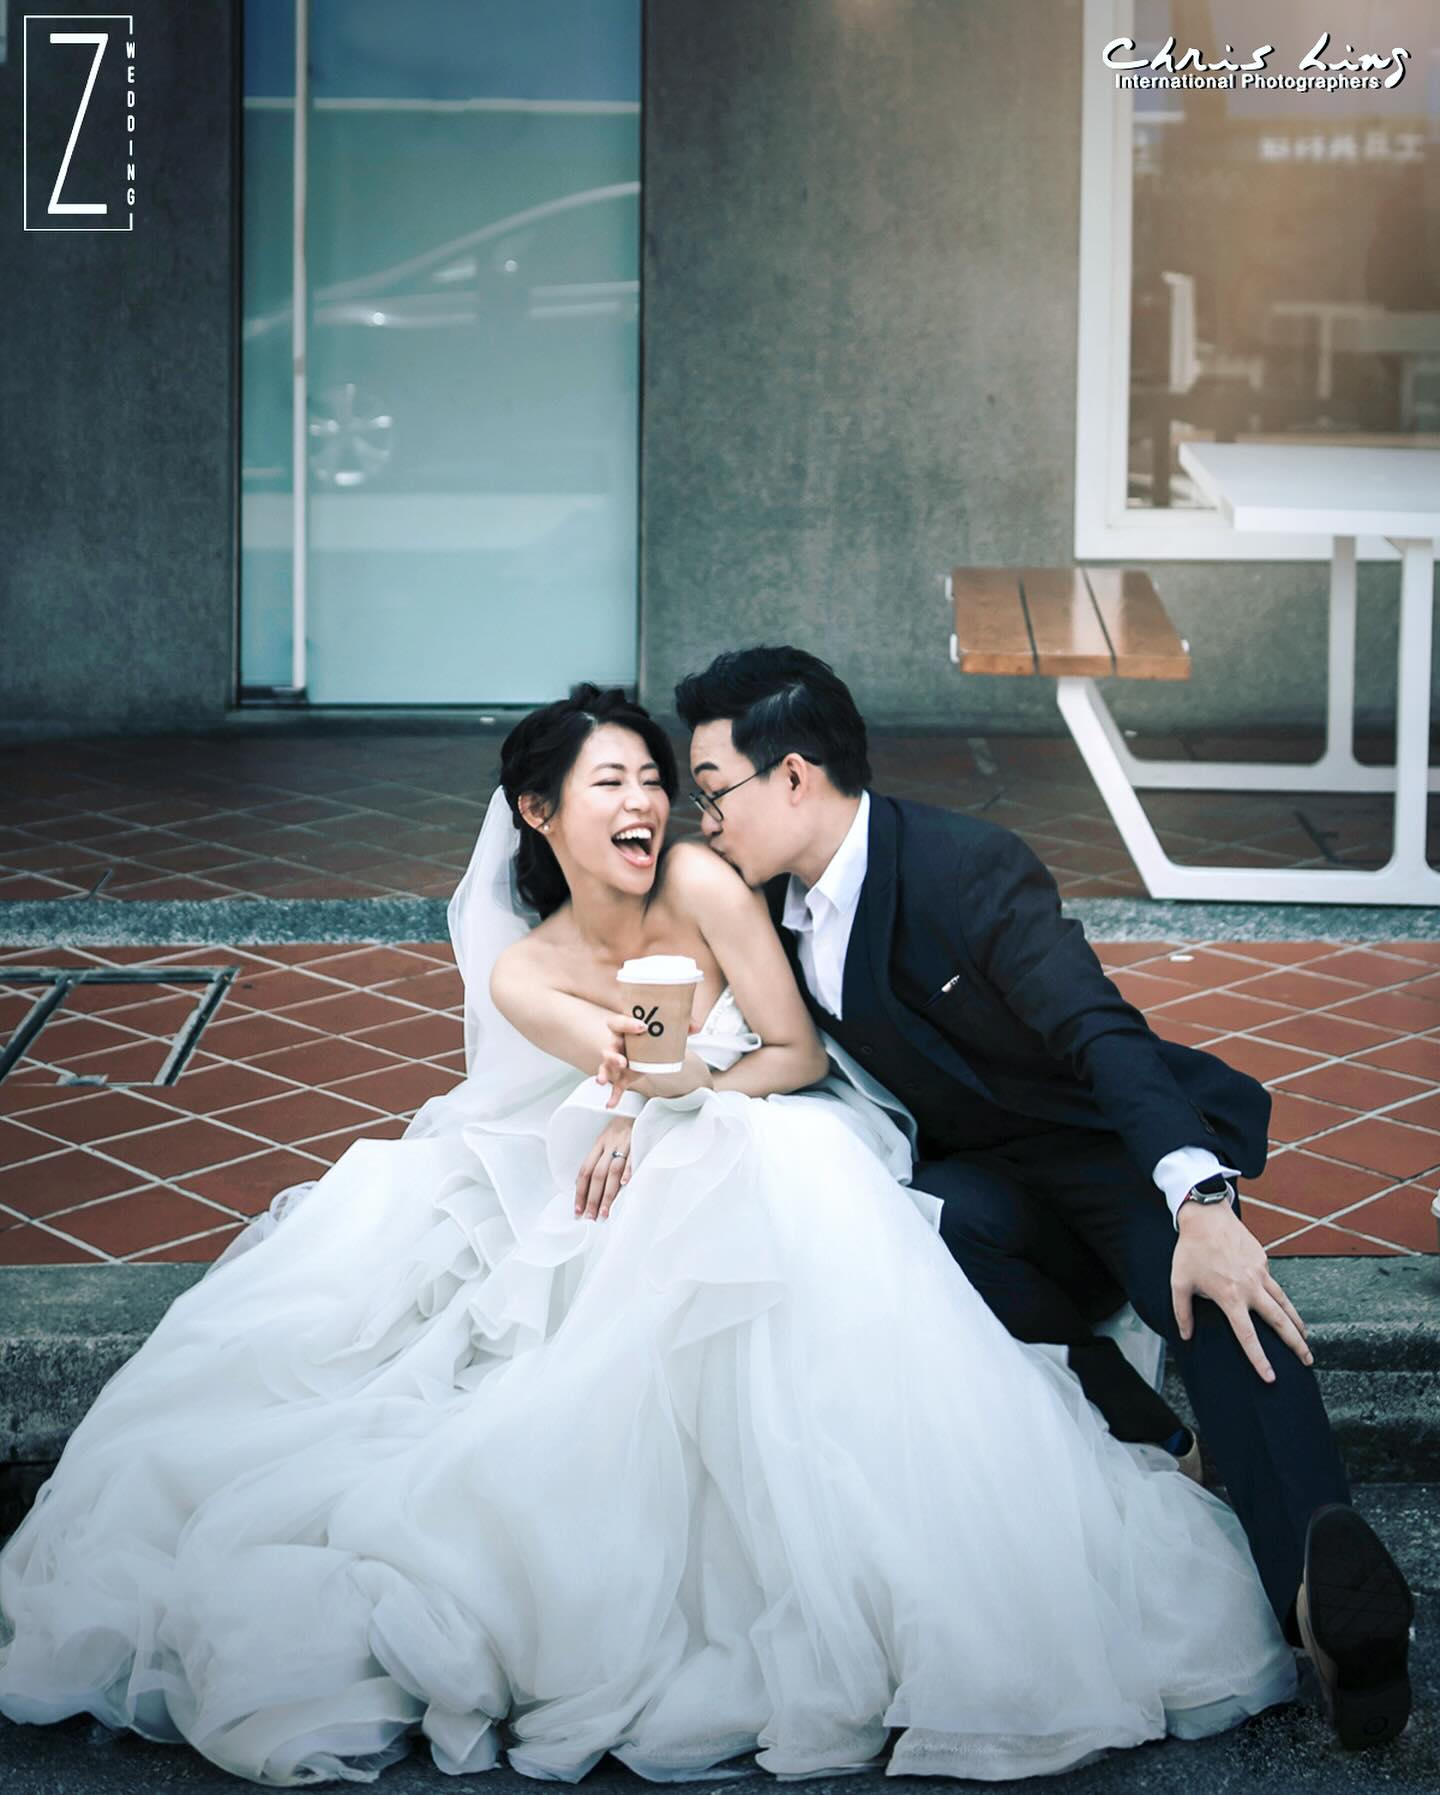 Our True Story - Wei Ping & Joannne